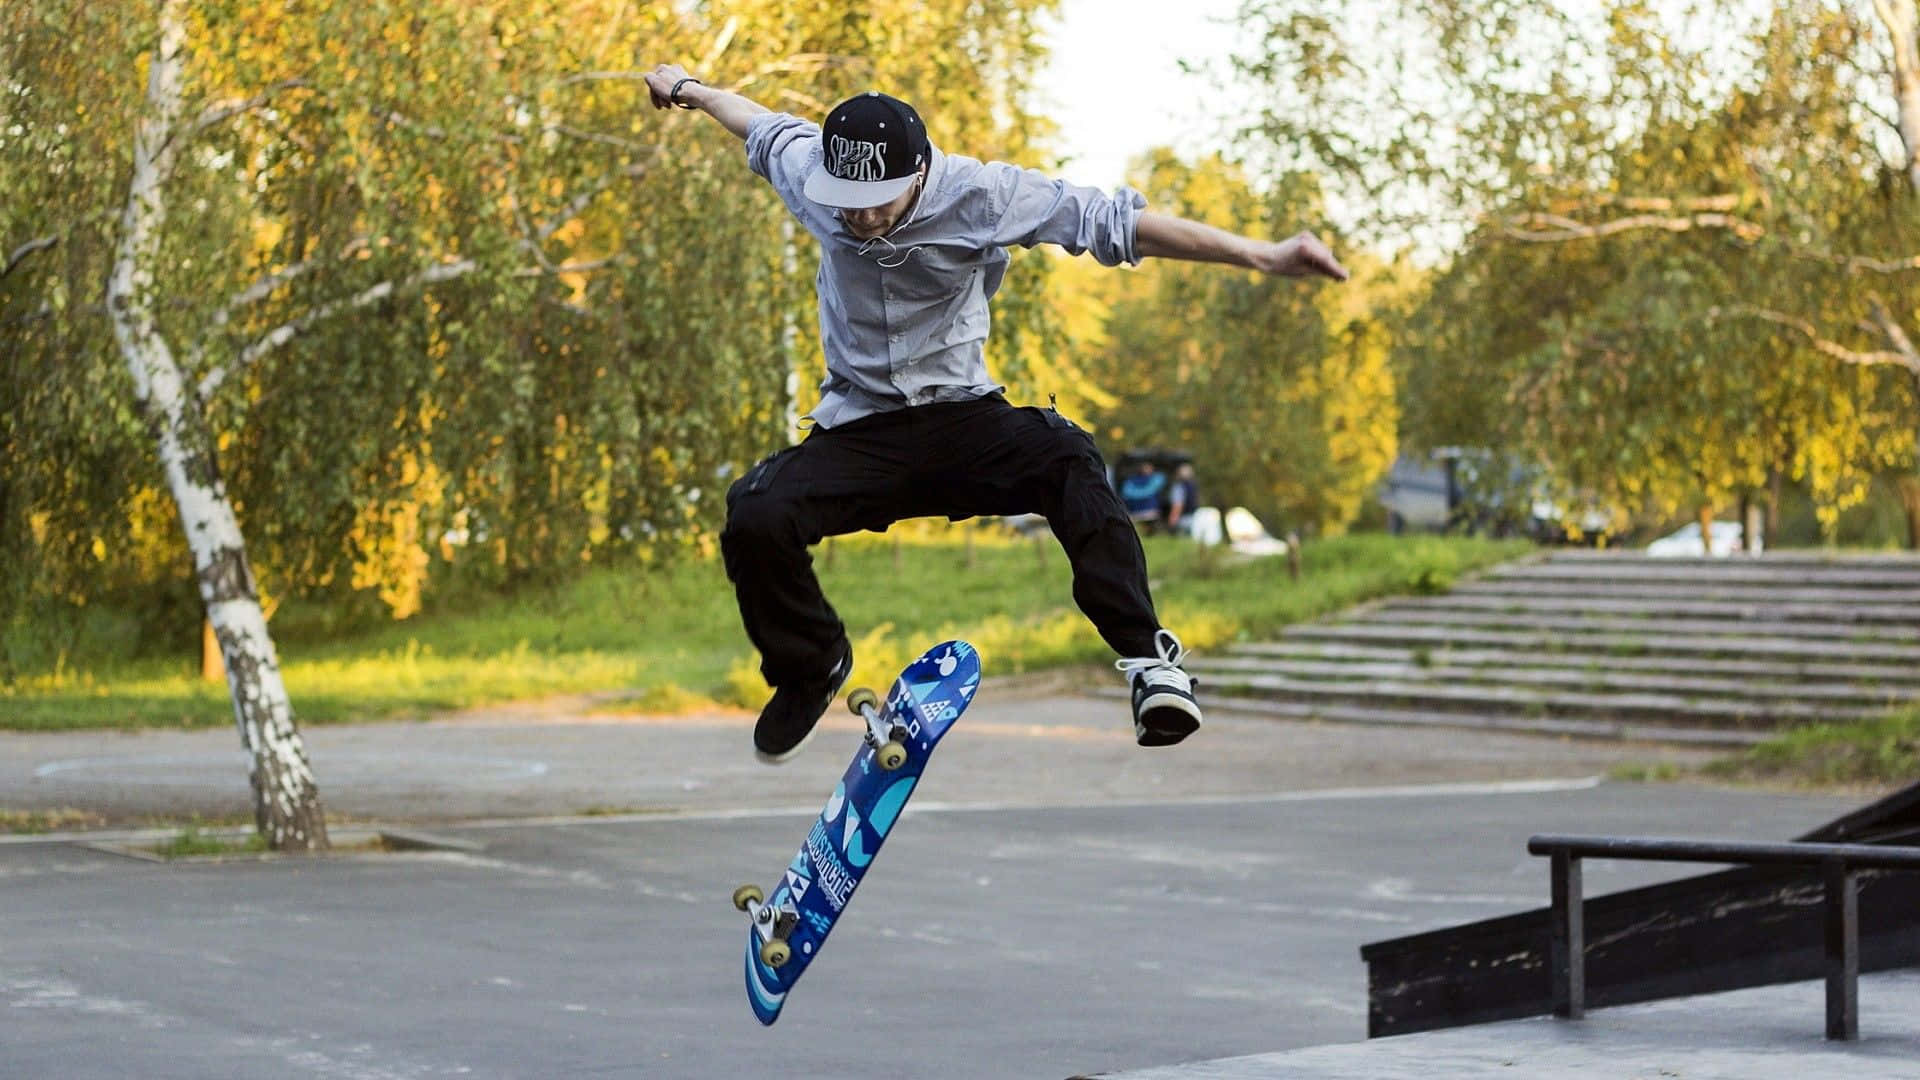 A Man Is Doing A Trick On A Skateboard Wallpaper